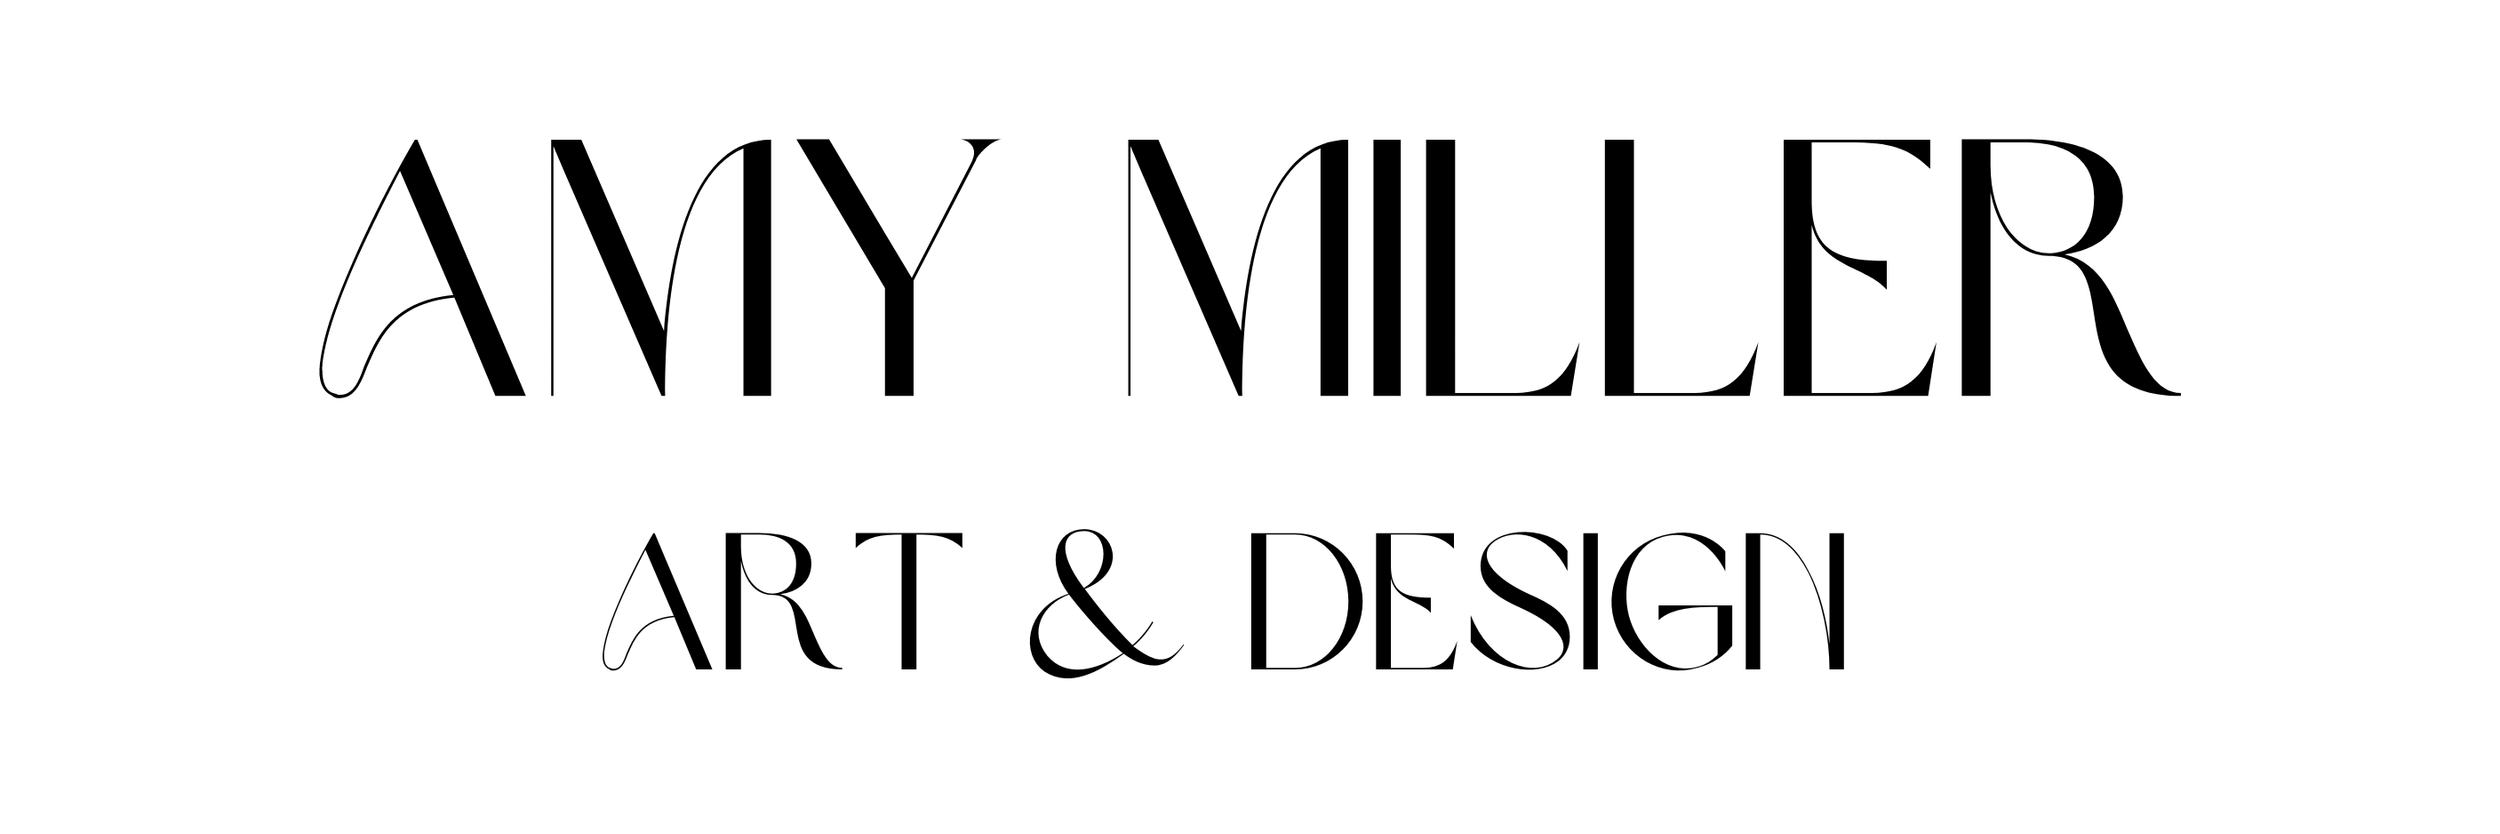 black logo 1.png